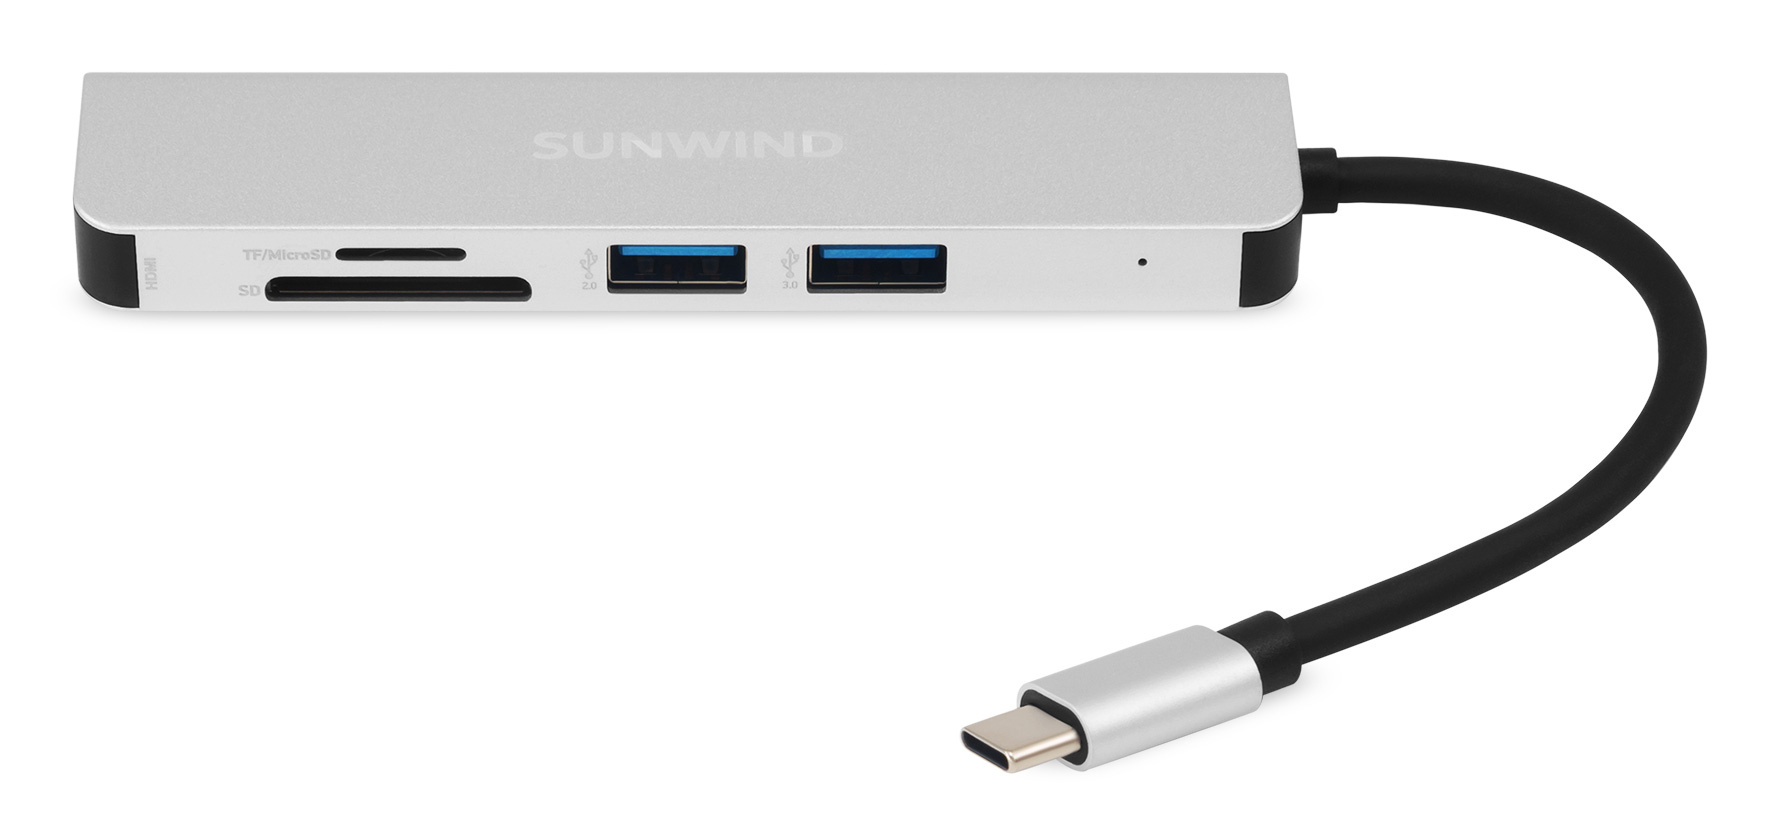   SunWind SW-DS032,  